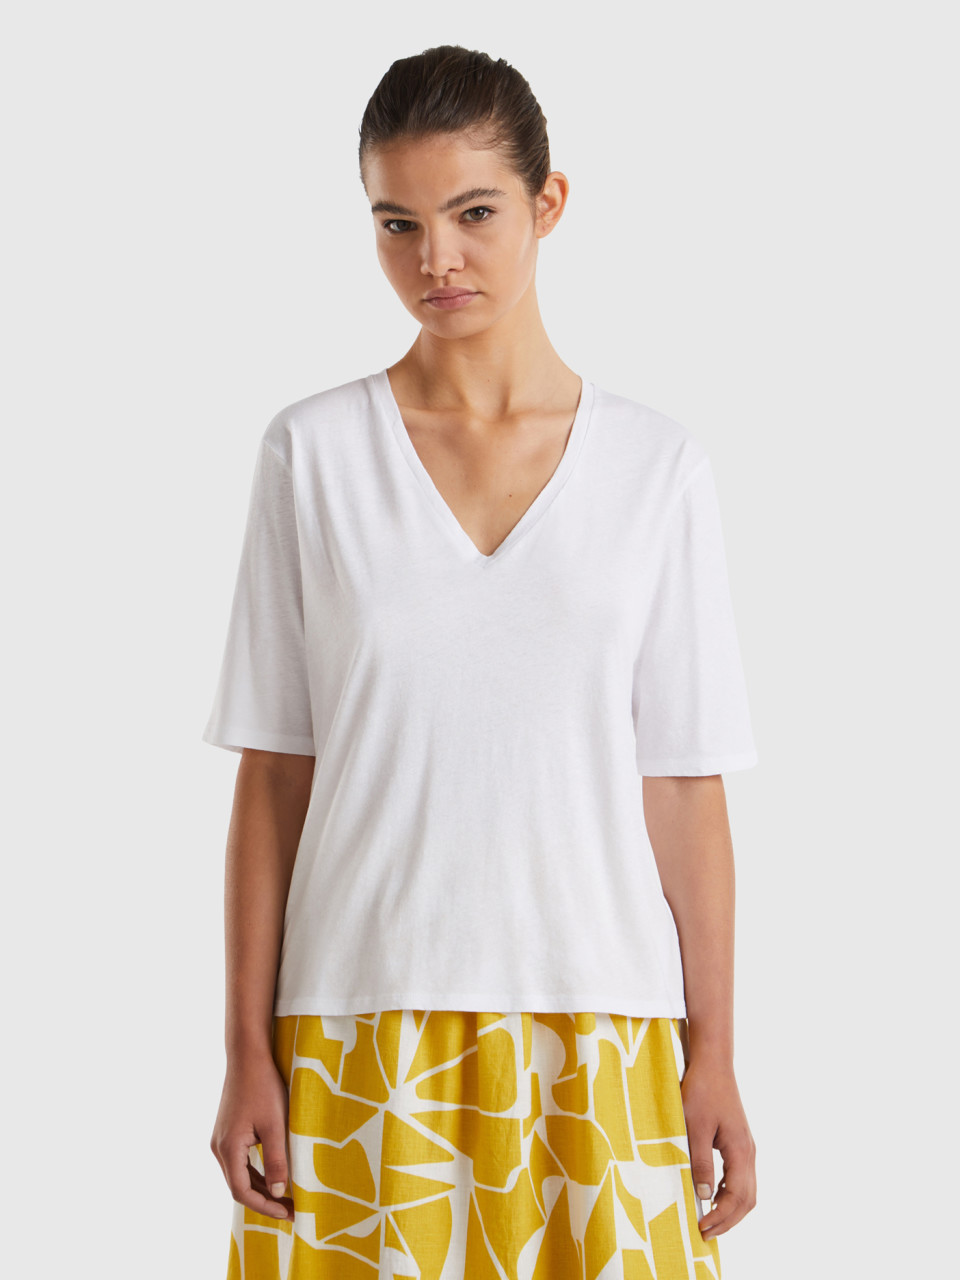 Benetton, T-shirt In Cotton And Linen Blend, White, Women